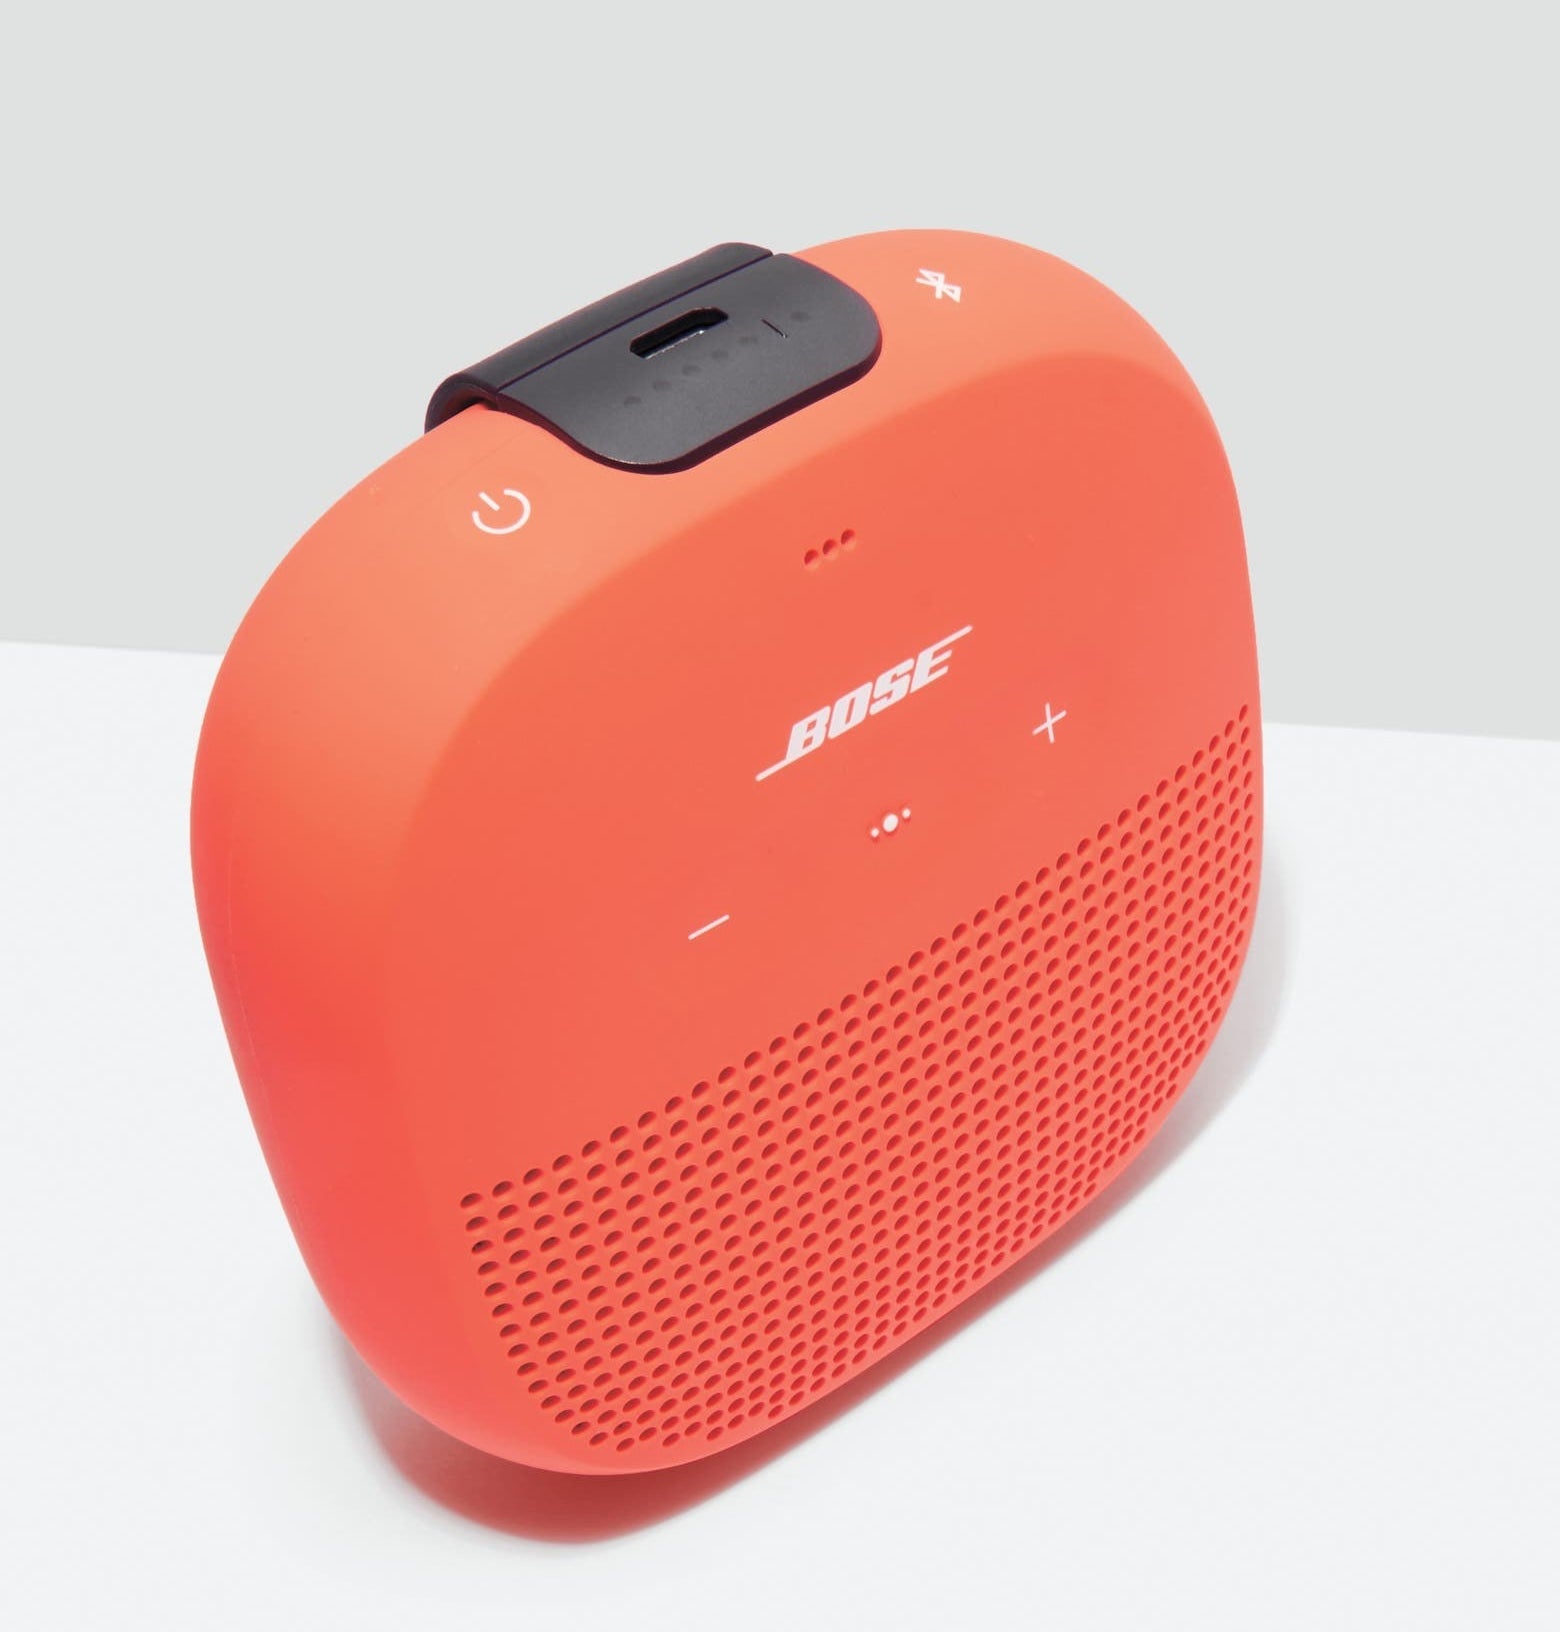 The Bose bluetooth speaker in orange